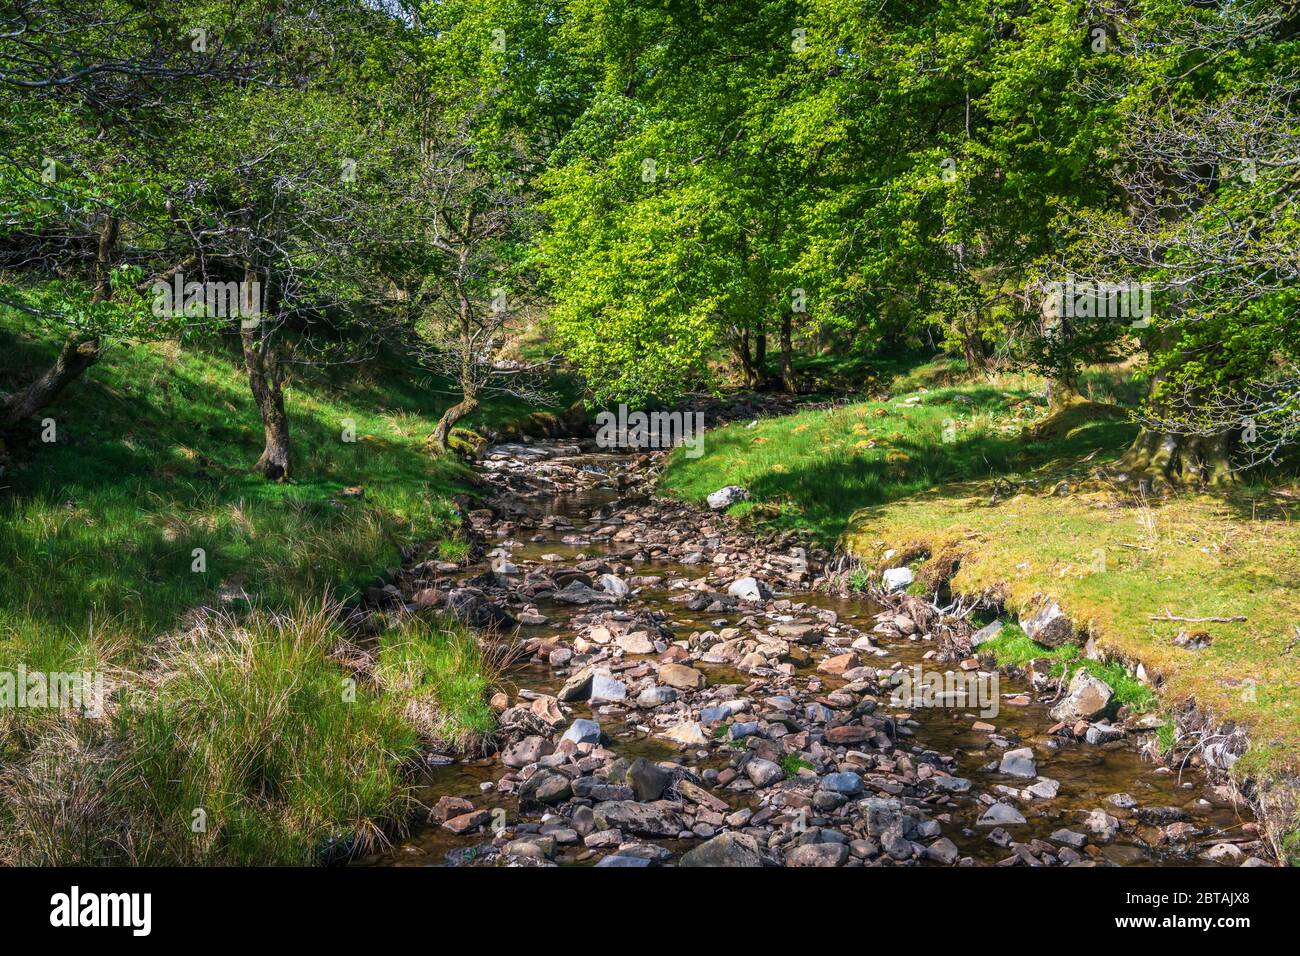 Ein Sommer drei Bilder HDR Bild von Back Gill in Kingsdale bei Ingleton, Yorkshire Dales National Park, England. 21 Mai 2020 Stockfoto